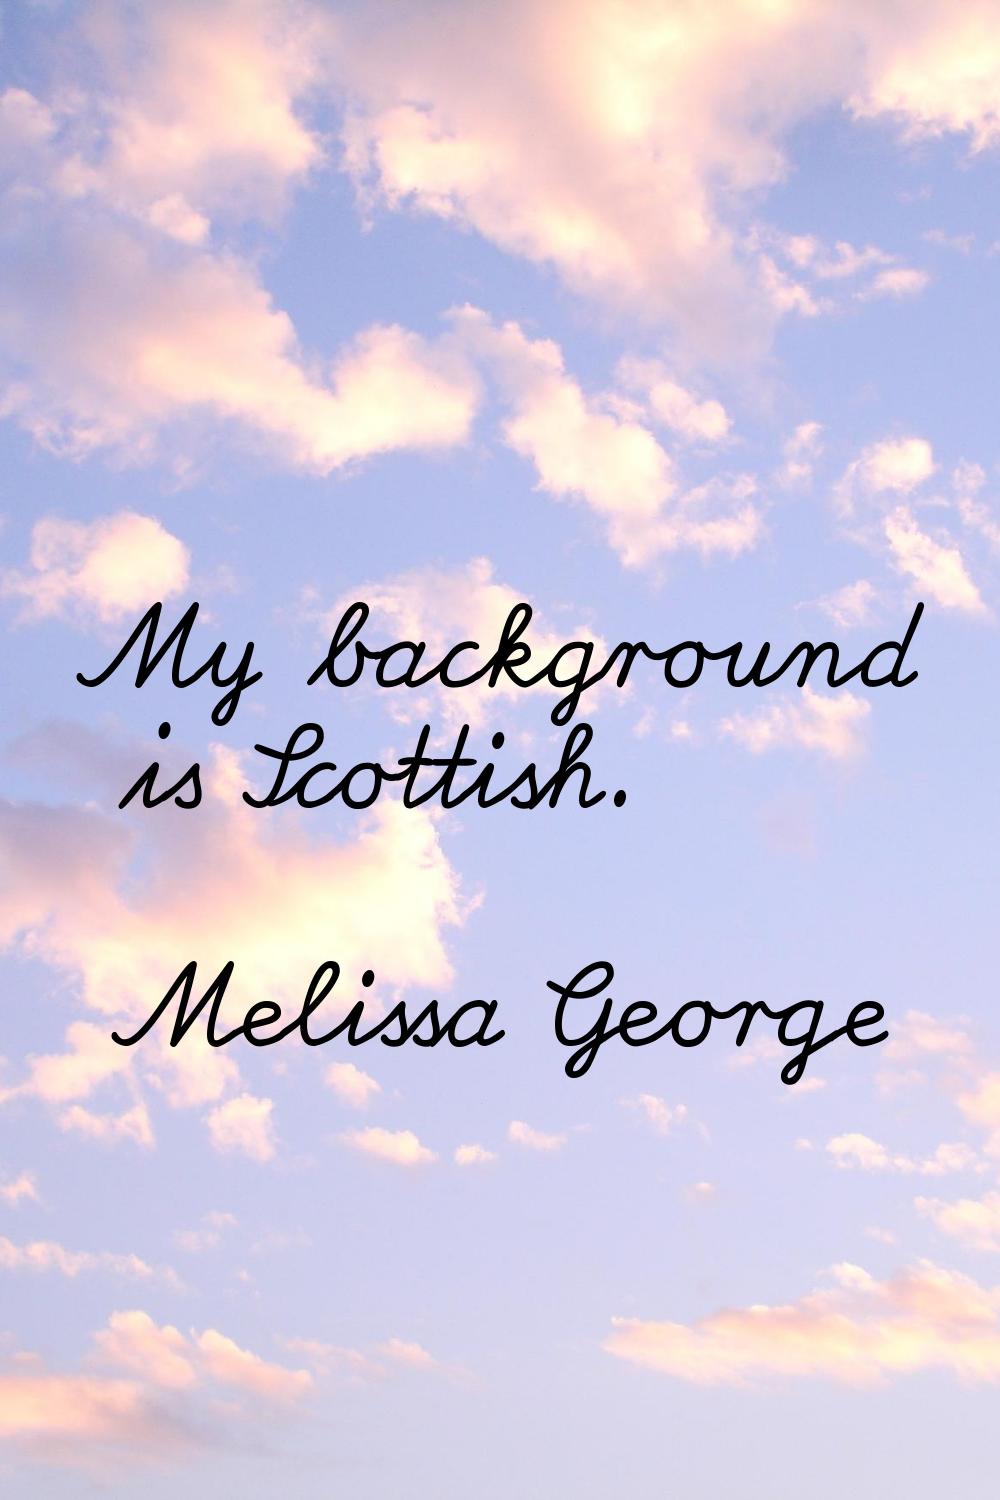 My background is Scottish.